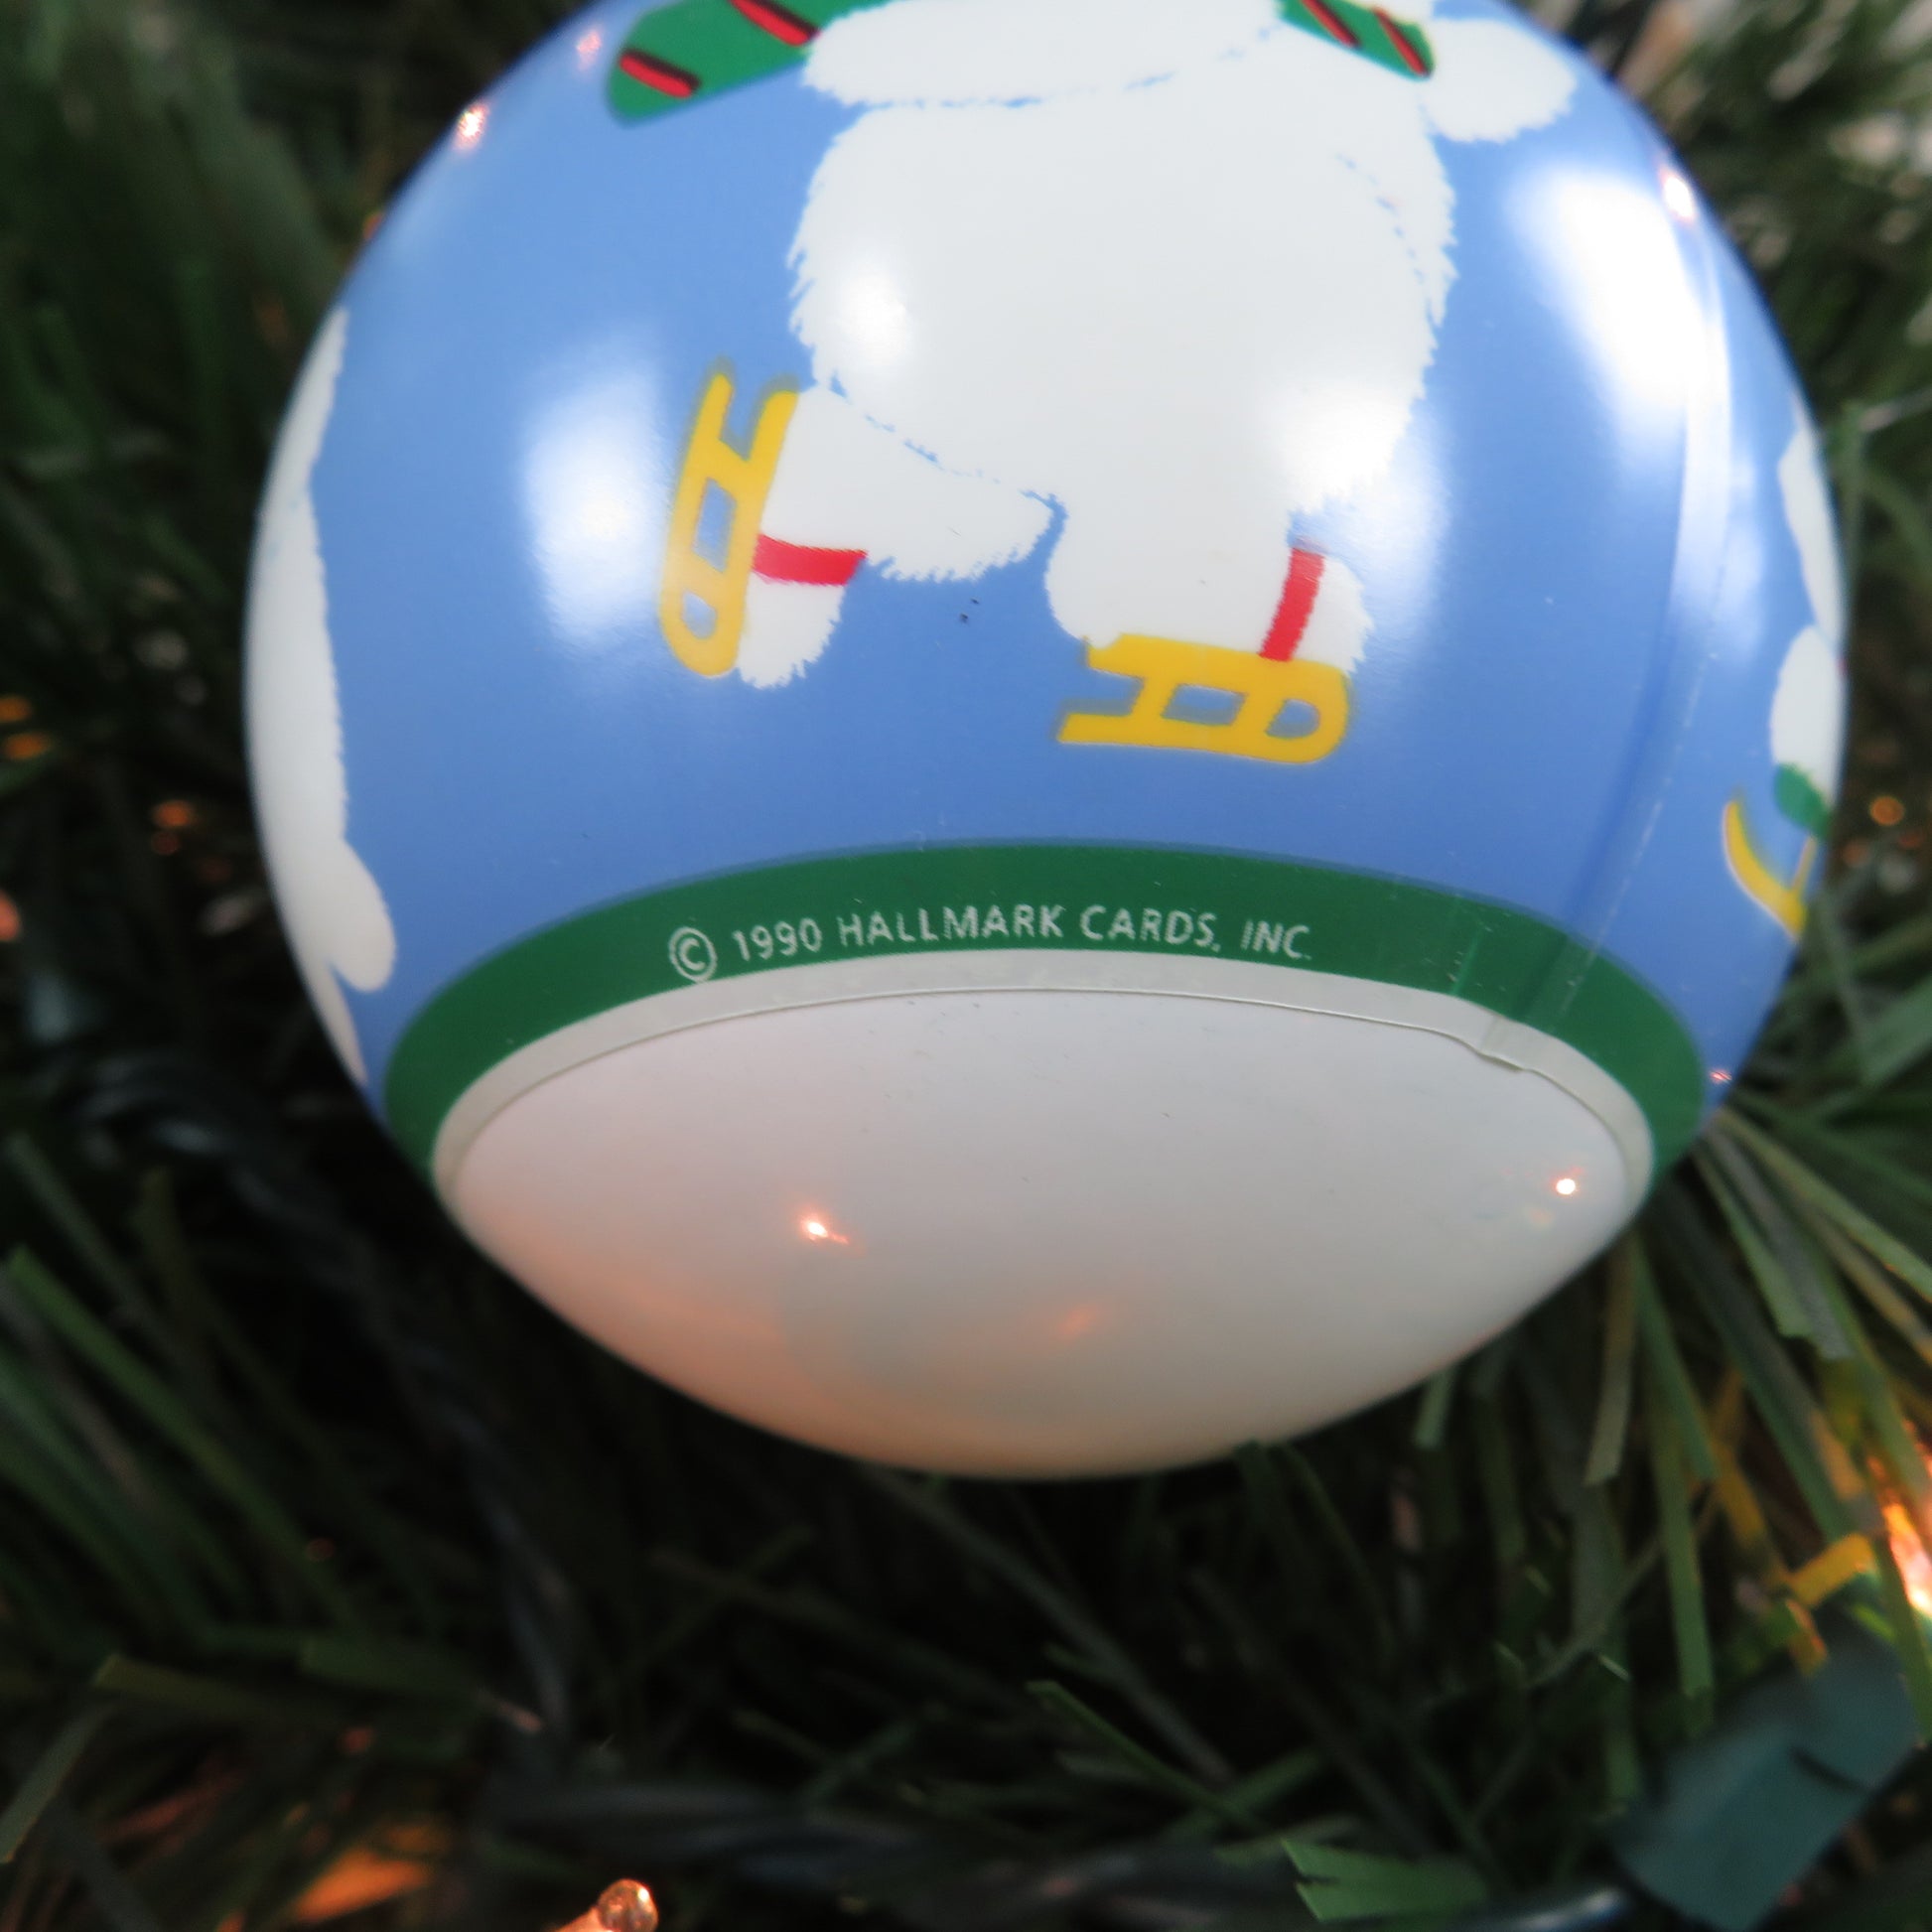 Vintage Grandson Bear Ornament Ball Hallmark Grandson Fills Christmas With Cheer 1990 - At Grandma's Table